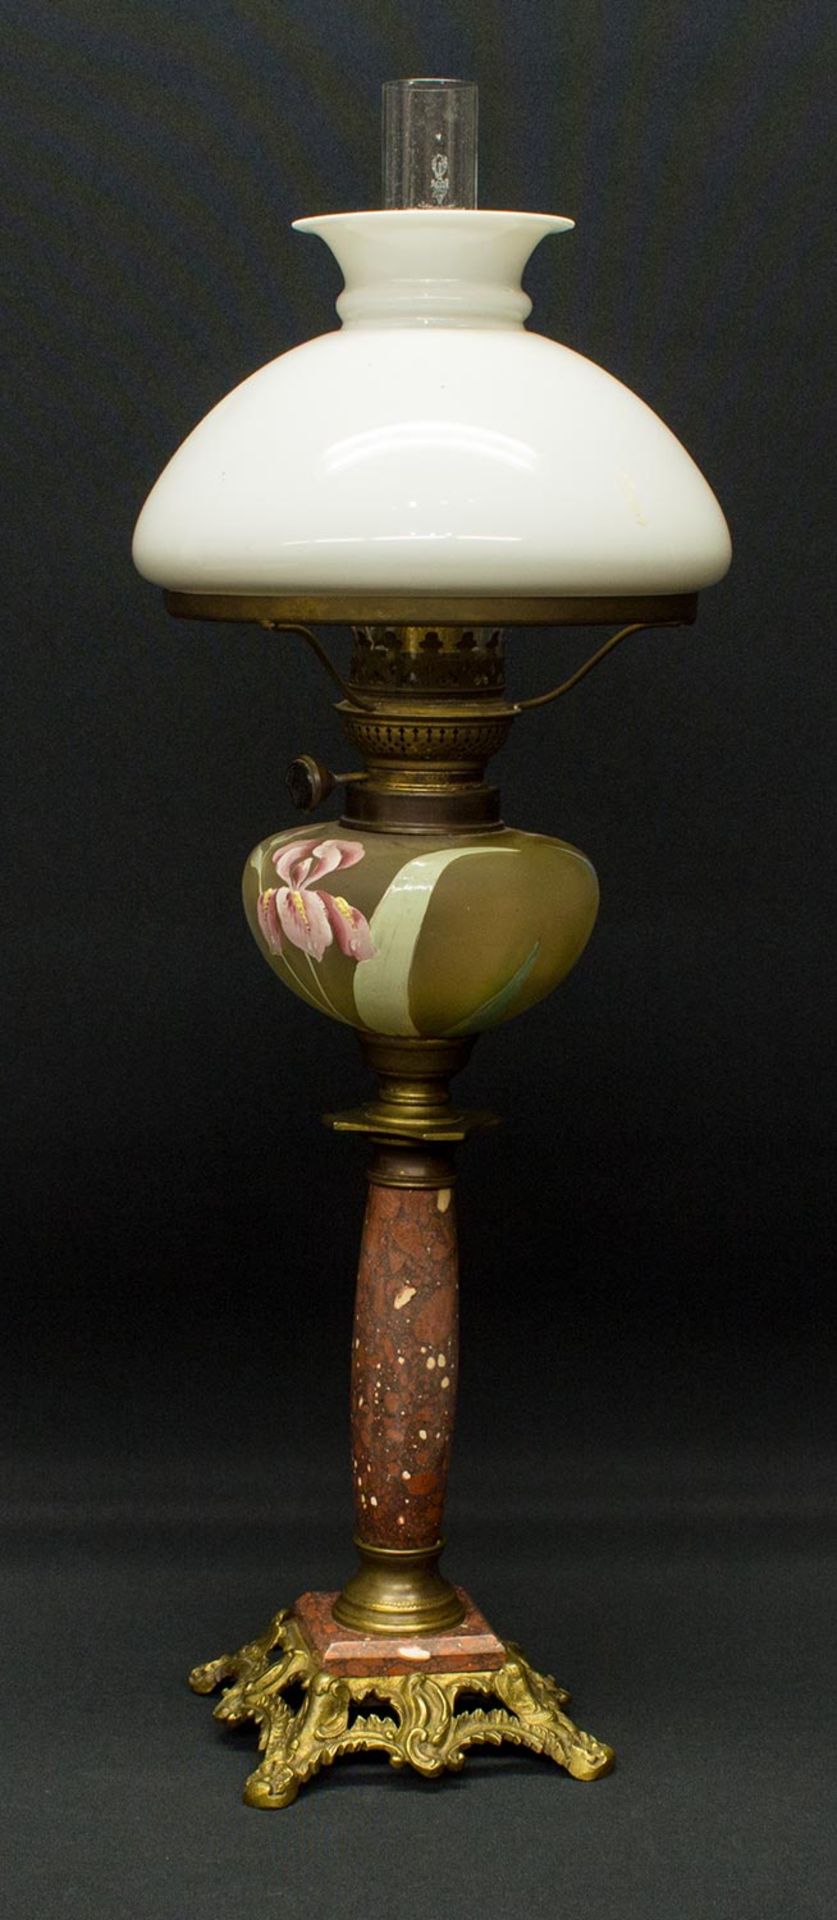 Jugendstil Petroleumlampeum 1900, Fuß aus Bronze u. Marmor, handbemalter Glastank mit floralem